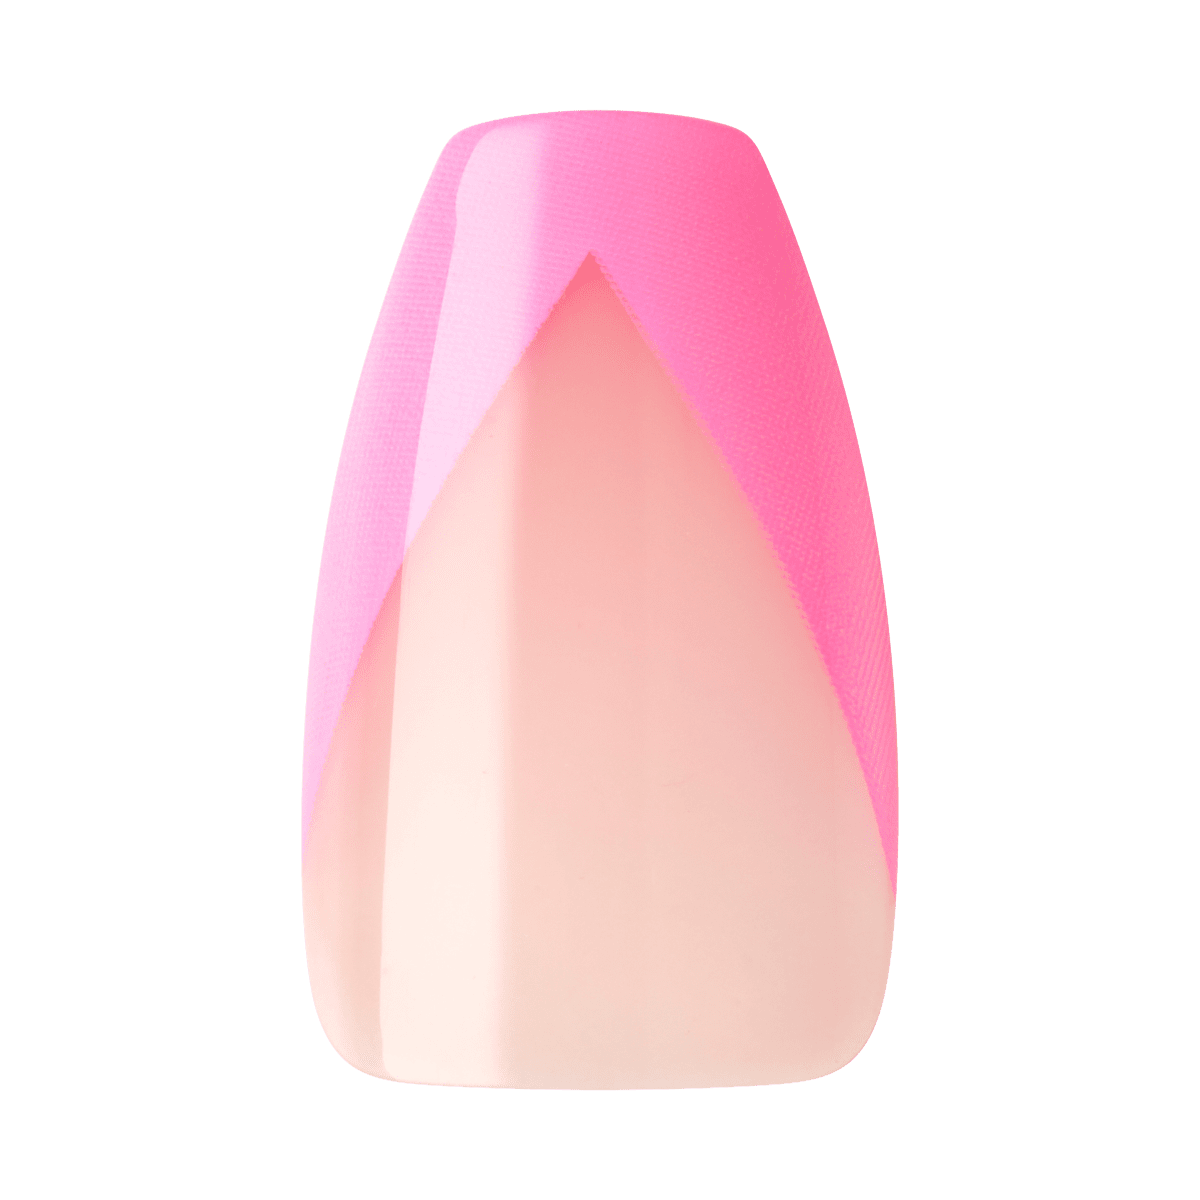 KISS Voguish Fantasy Limited Edition Nails - Pink Love